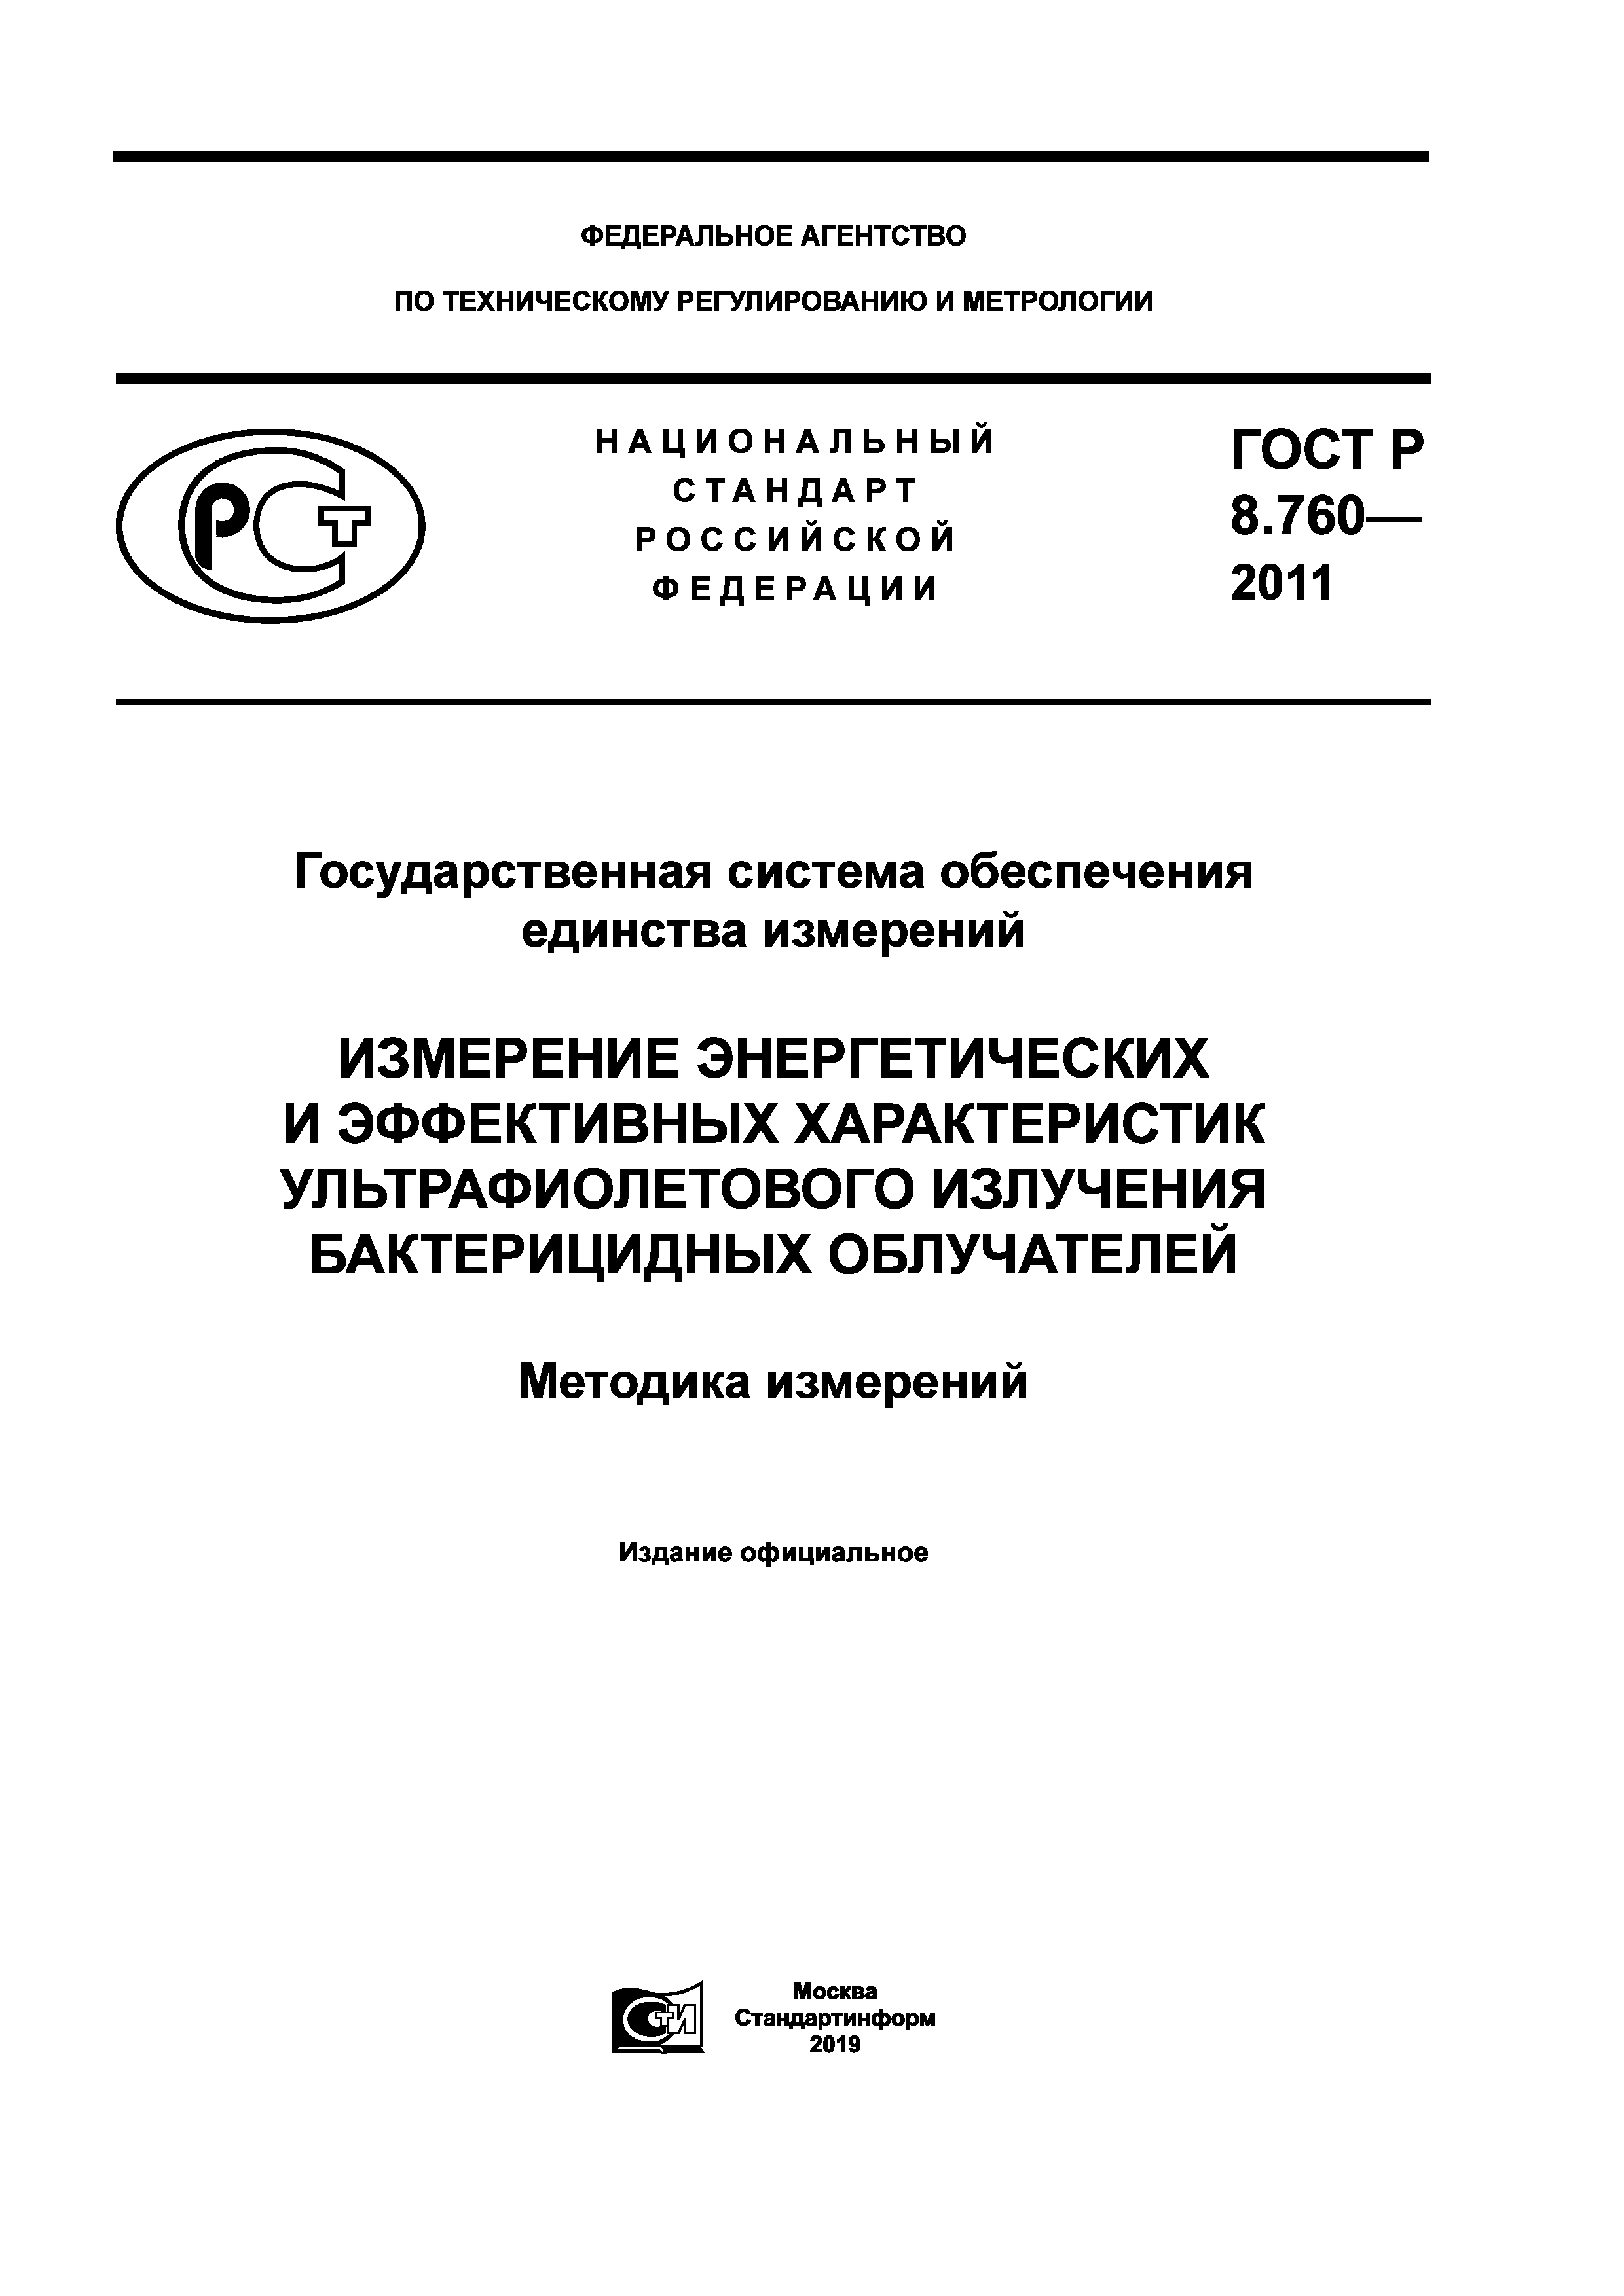 ГОСТ Р 8.760-2011